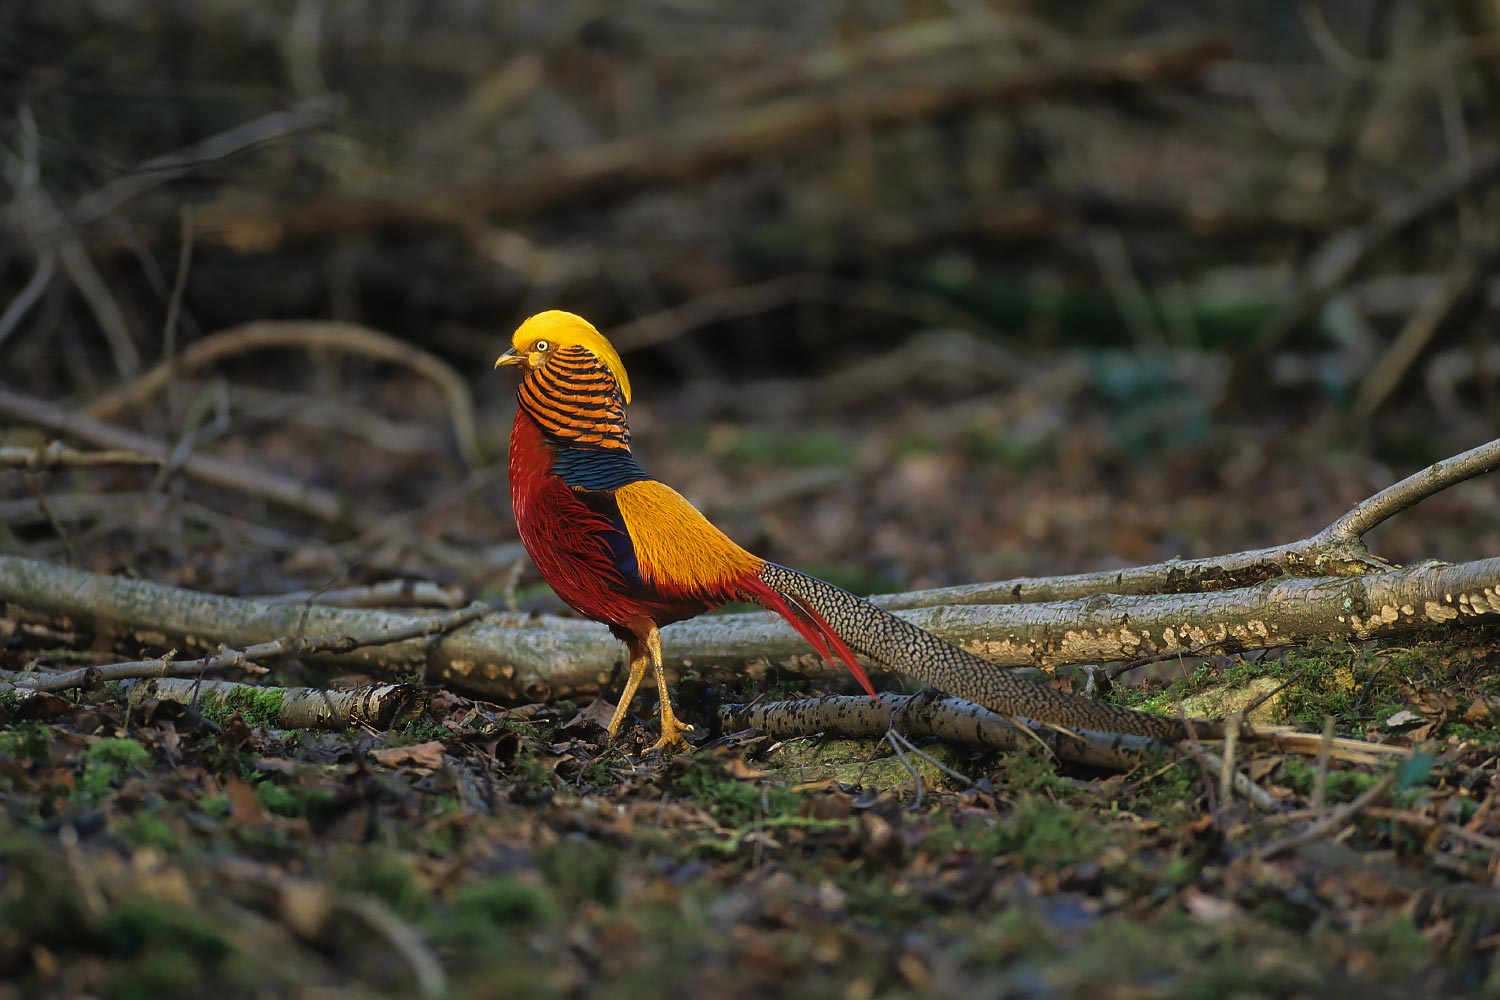 British Golden Pheasant population deemed functionally extinct - BirdGuides